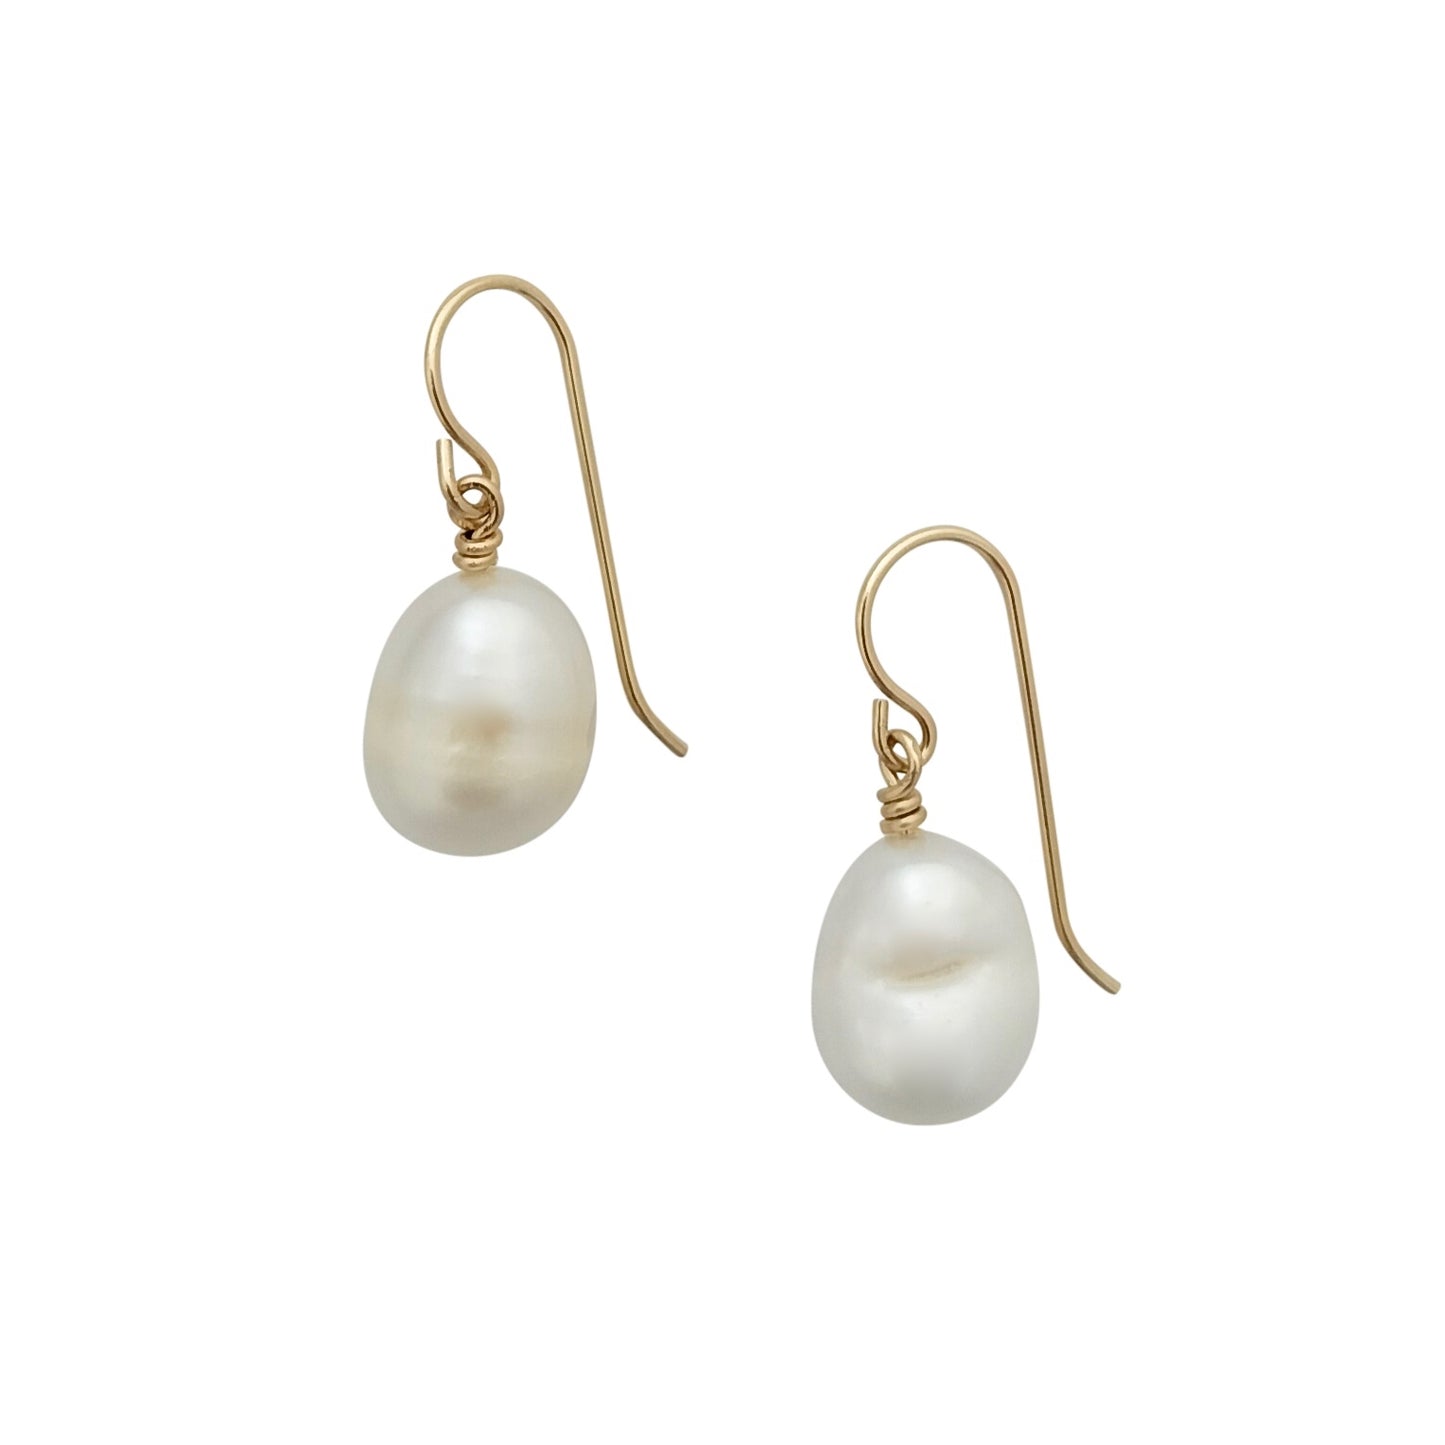 Classic Pearl drop earrings